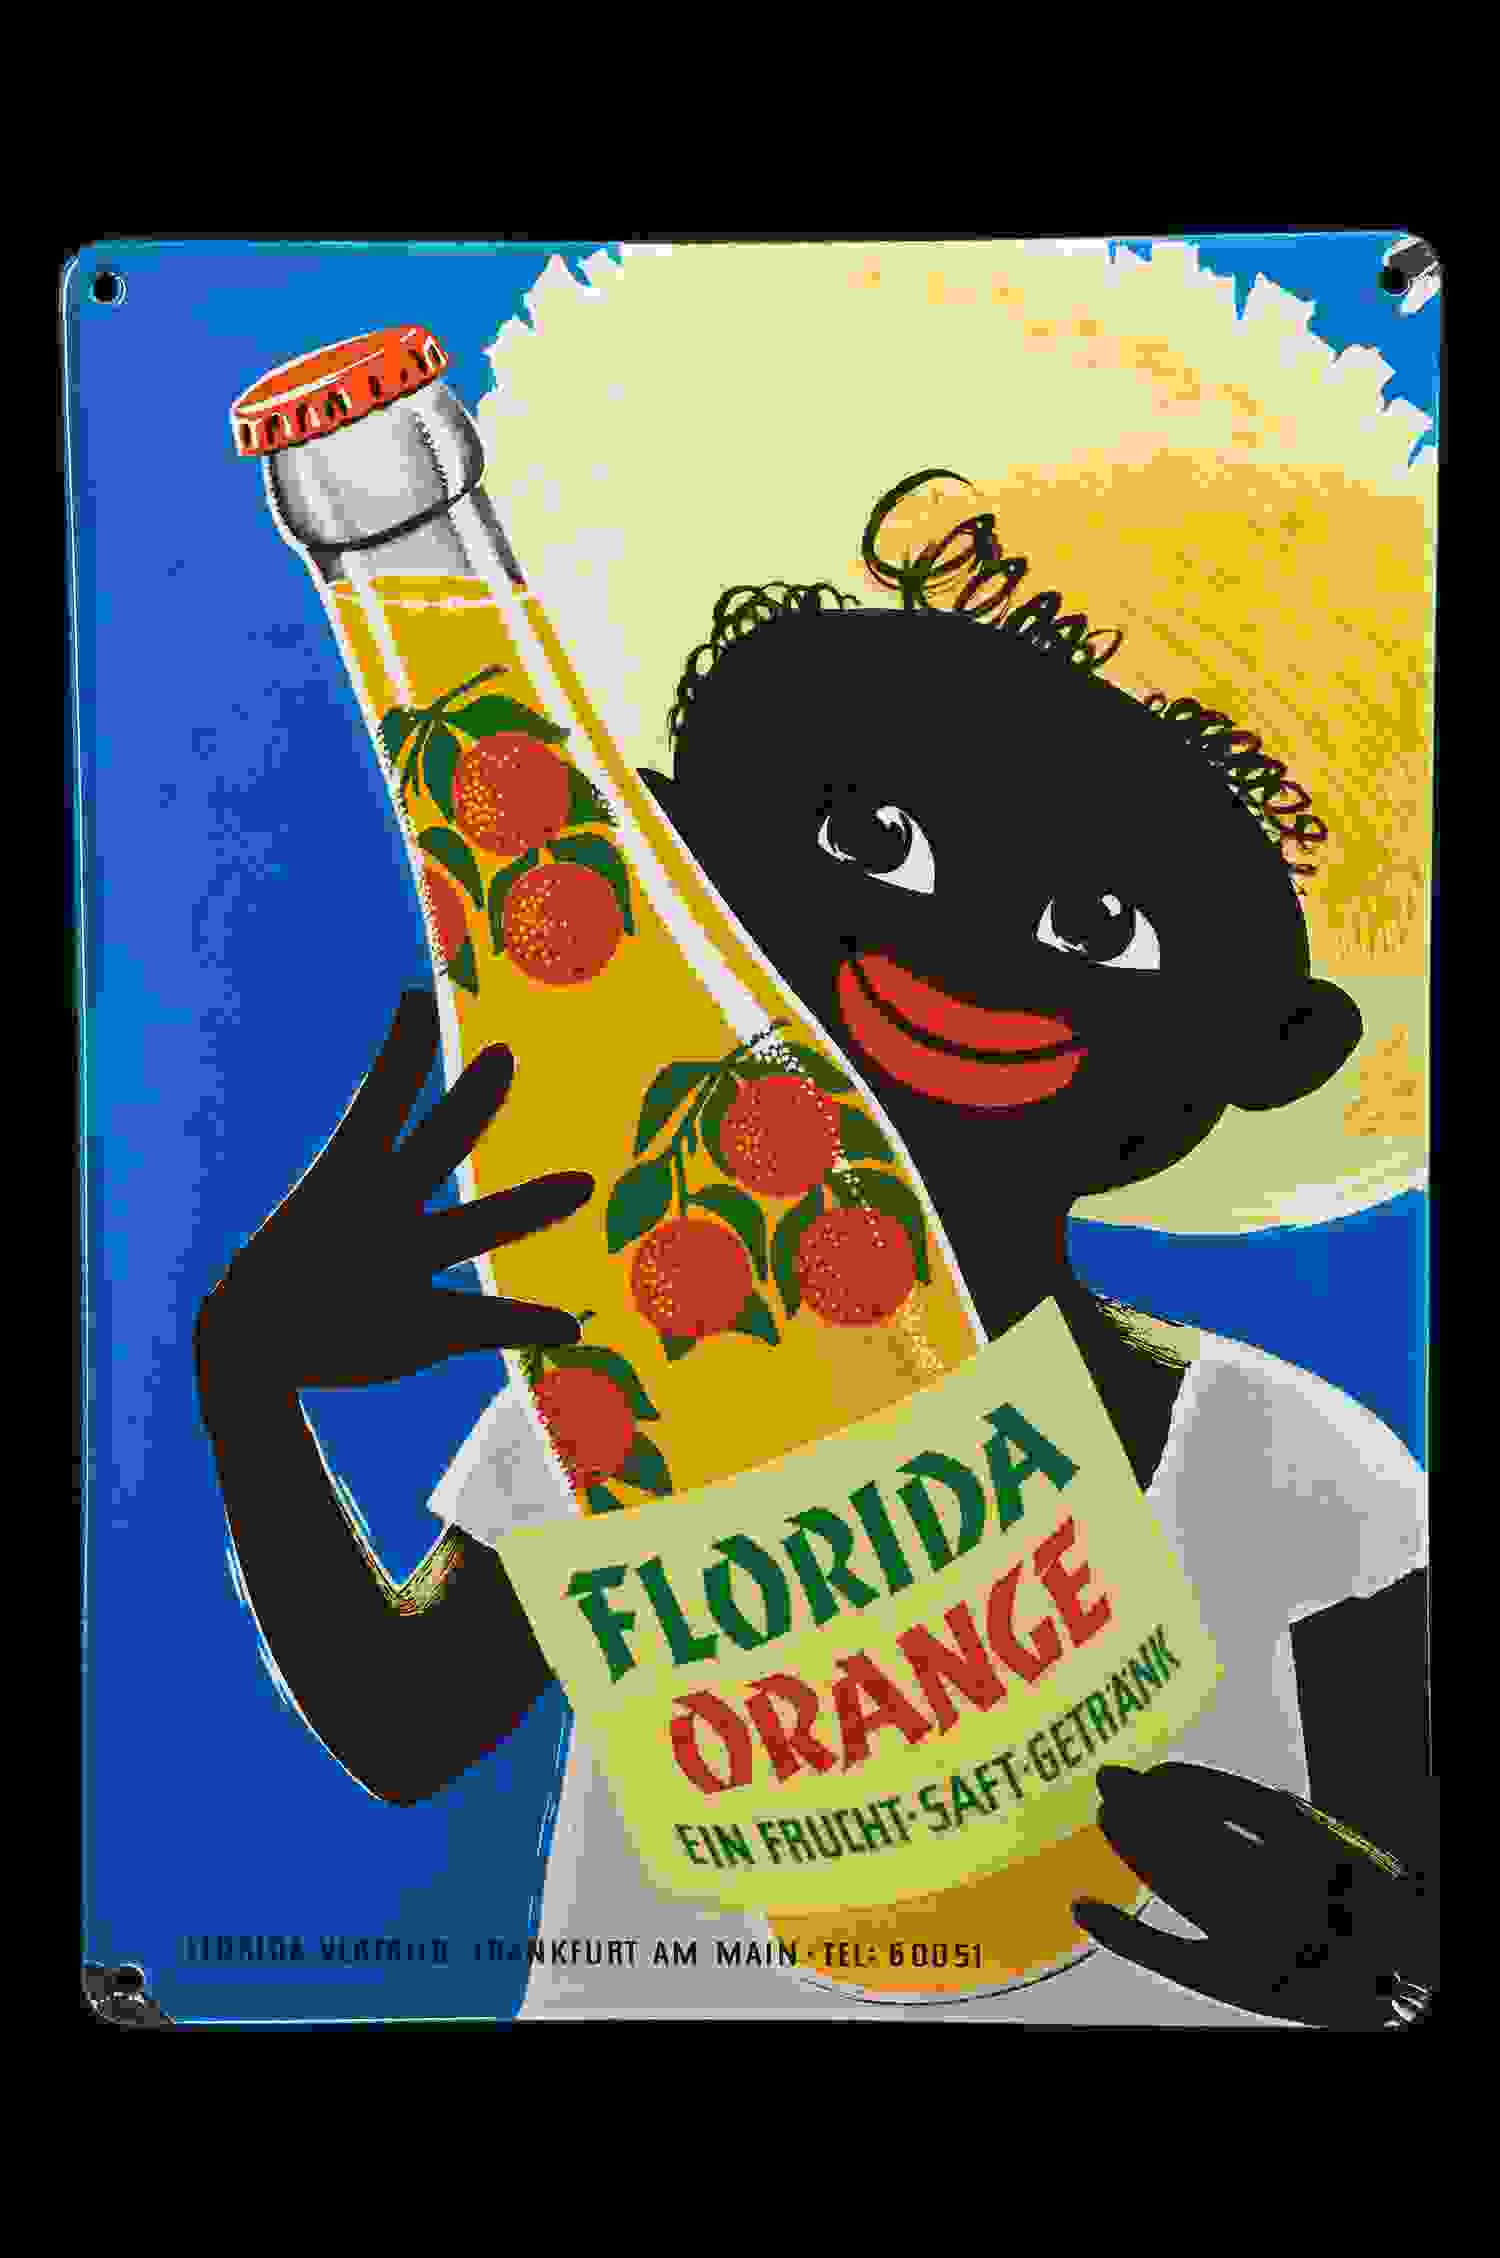 Florida Boy Orange 